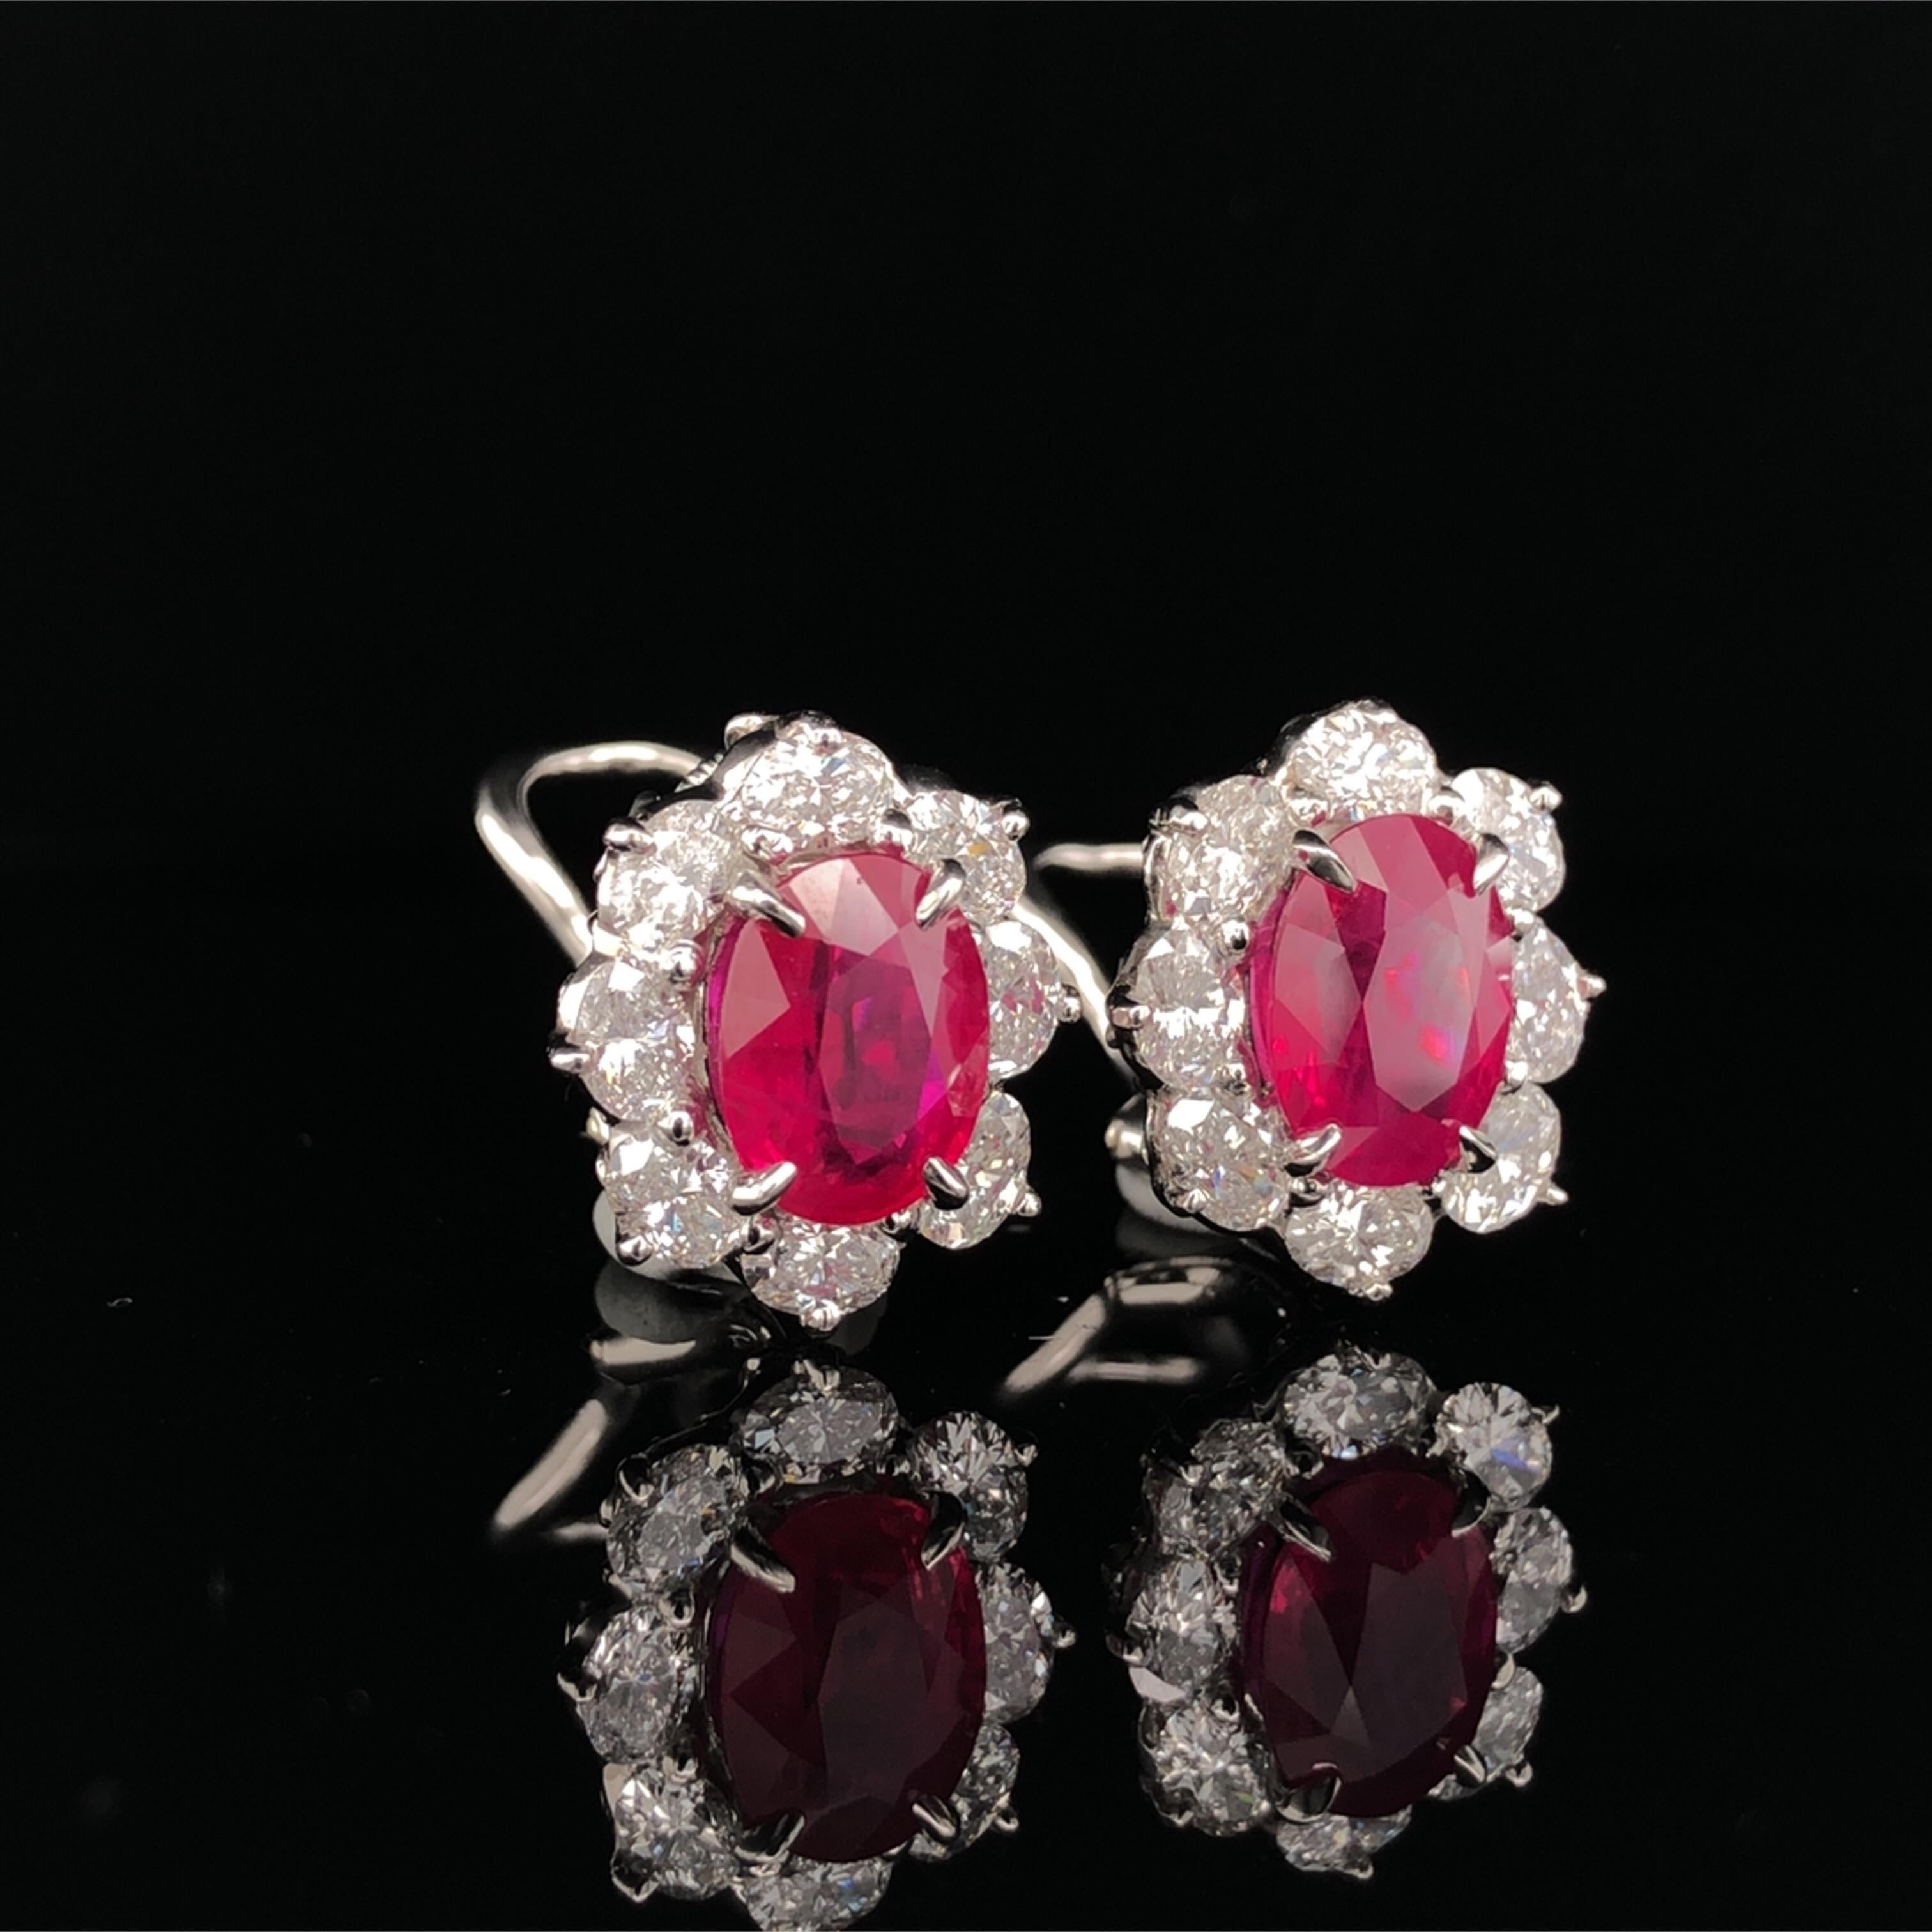 Contemporary Oscar Heyman 4.09tcw Burma Ruby Entourage Earrings